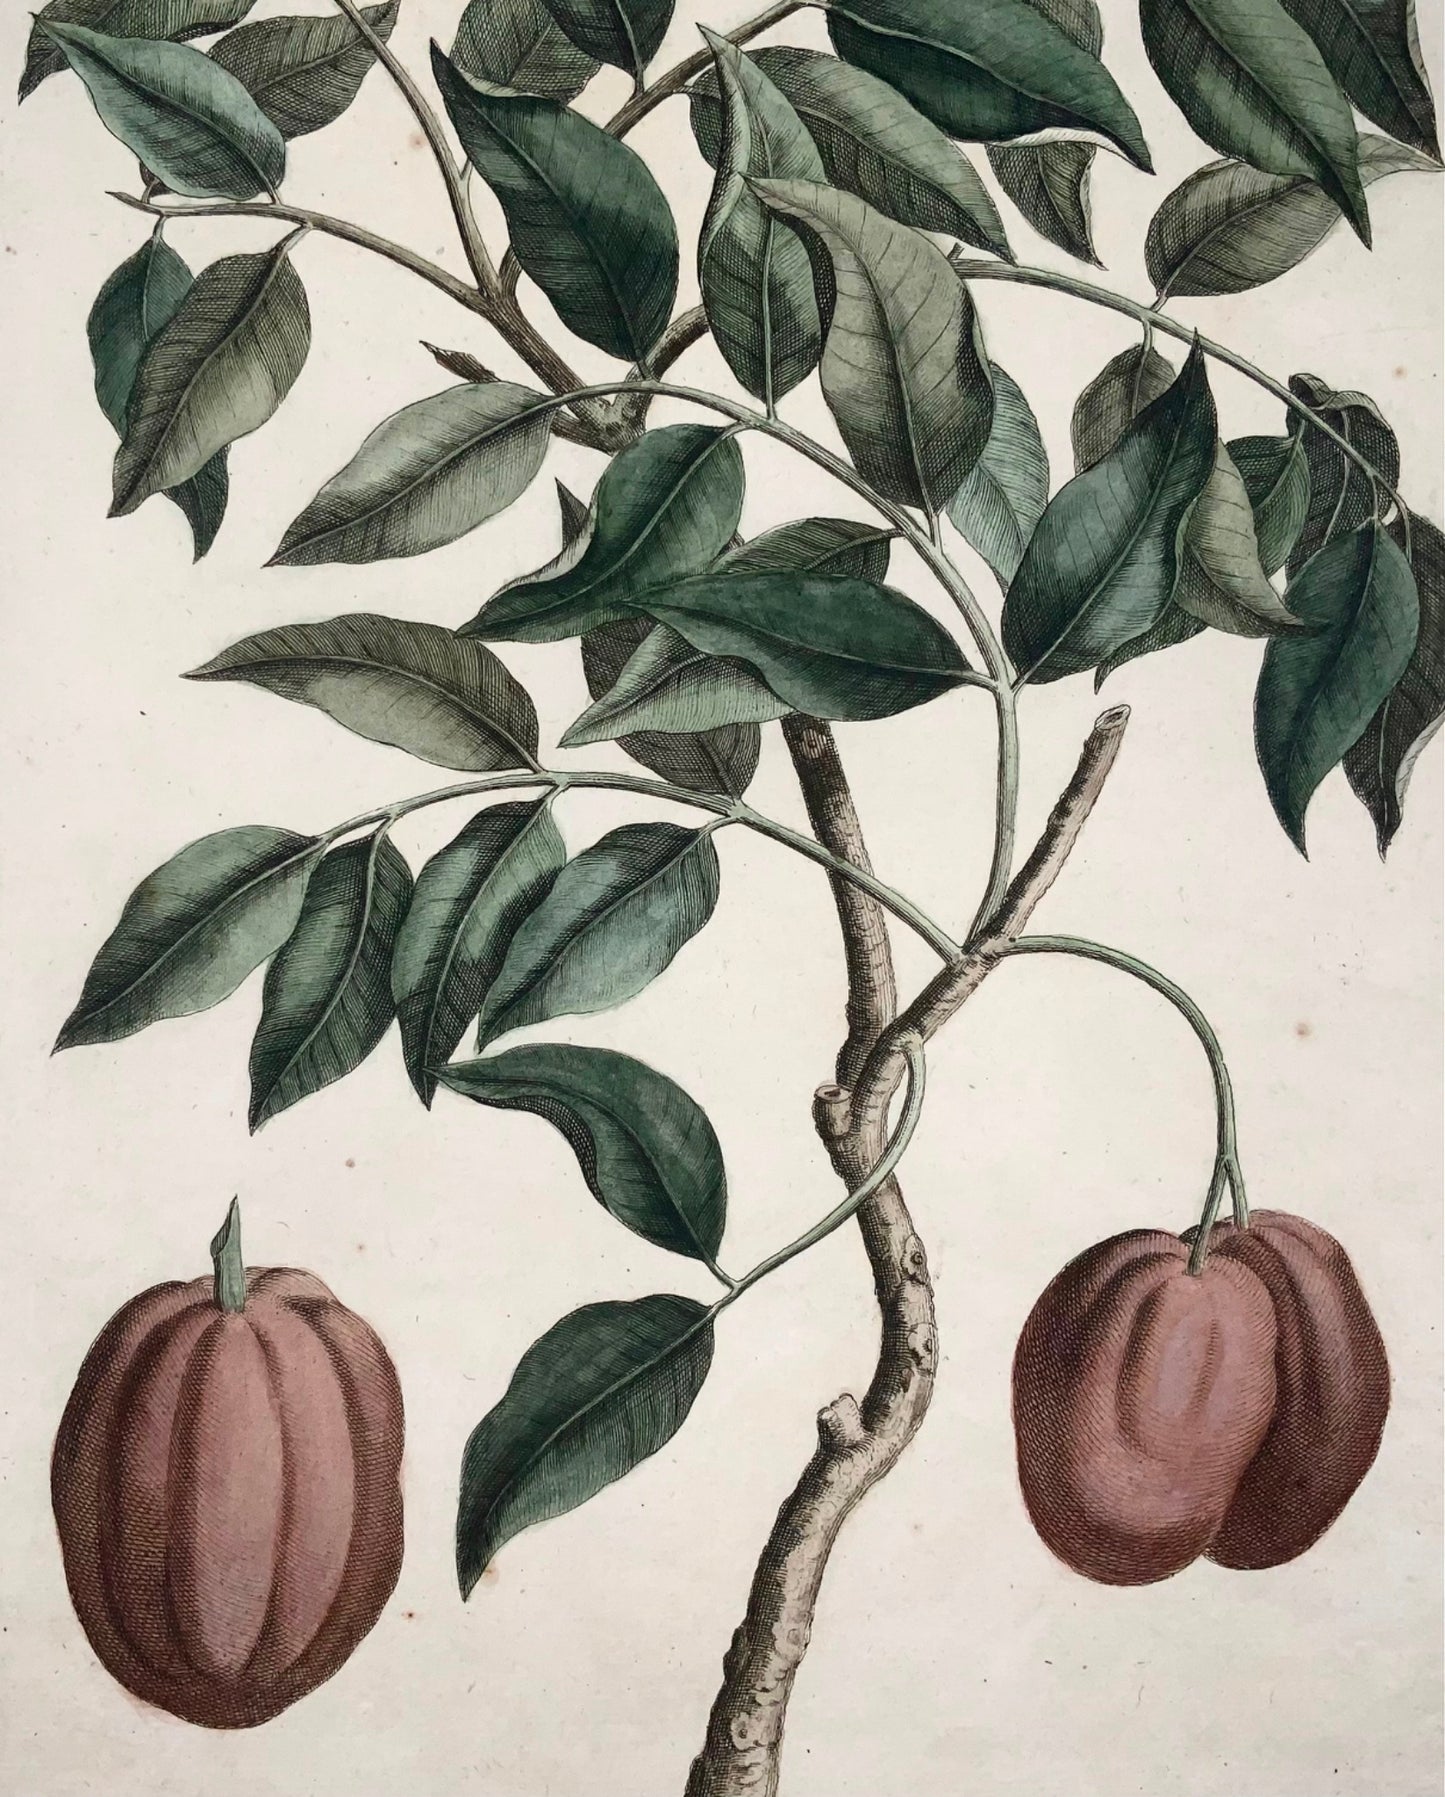 1741 Condondum Malacense, Rumpf, Herbarium Amboinense, hand colour, folio, fruit, botany